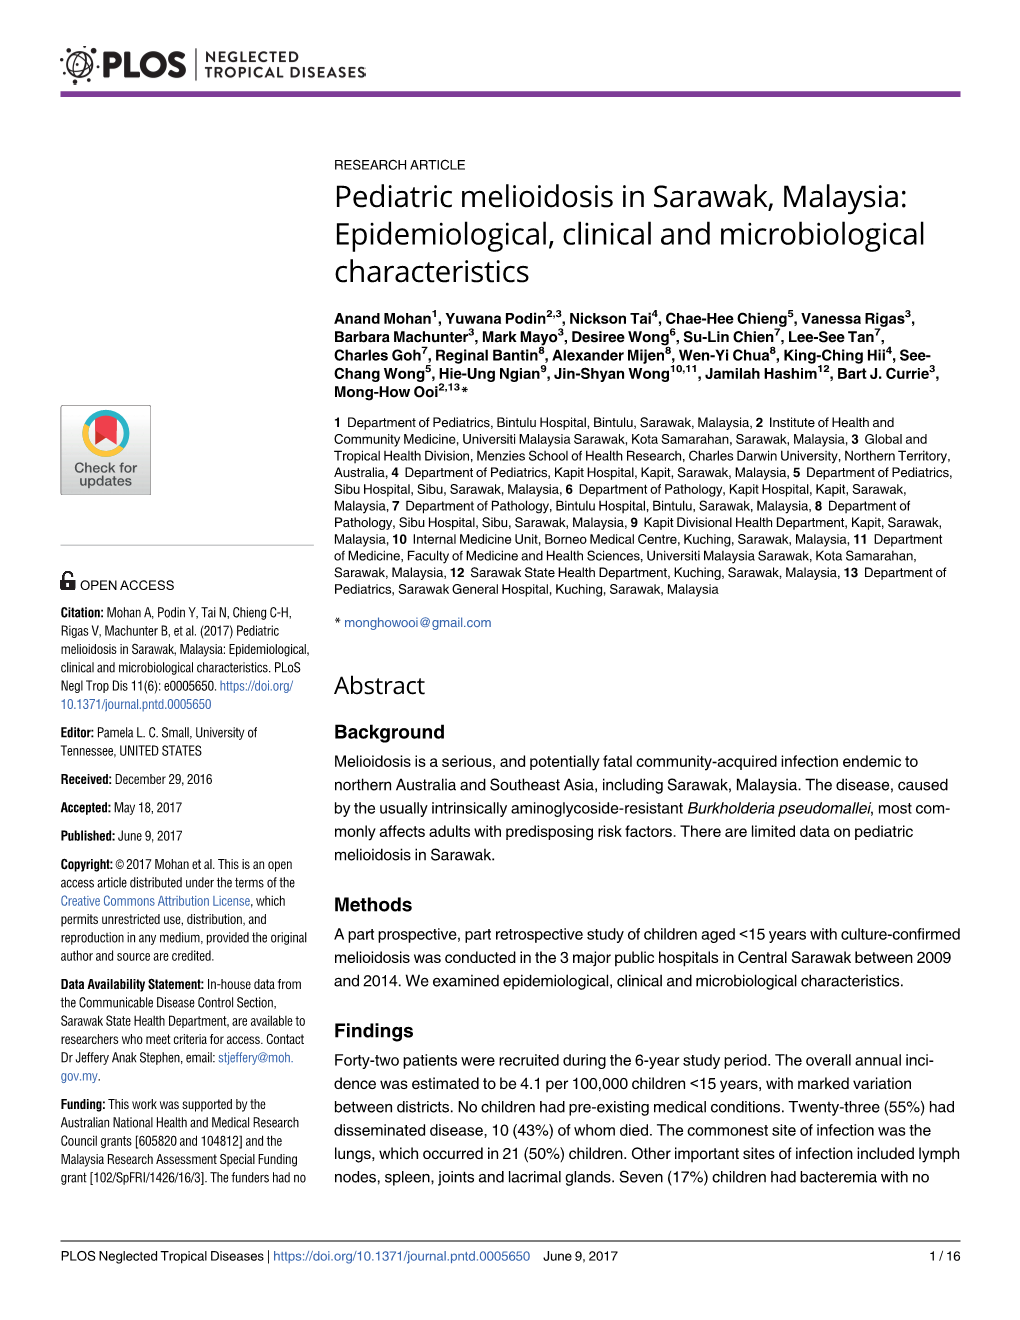 Pediatric Melioidosis in Sarawak, Malaysia: Epidemiological, Clinical and Microbiological Characteristics